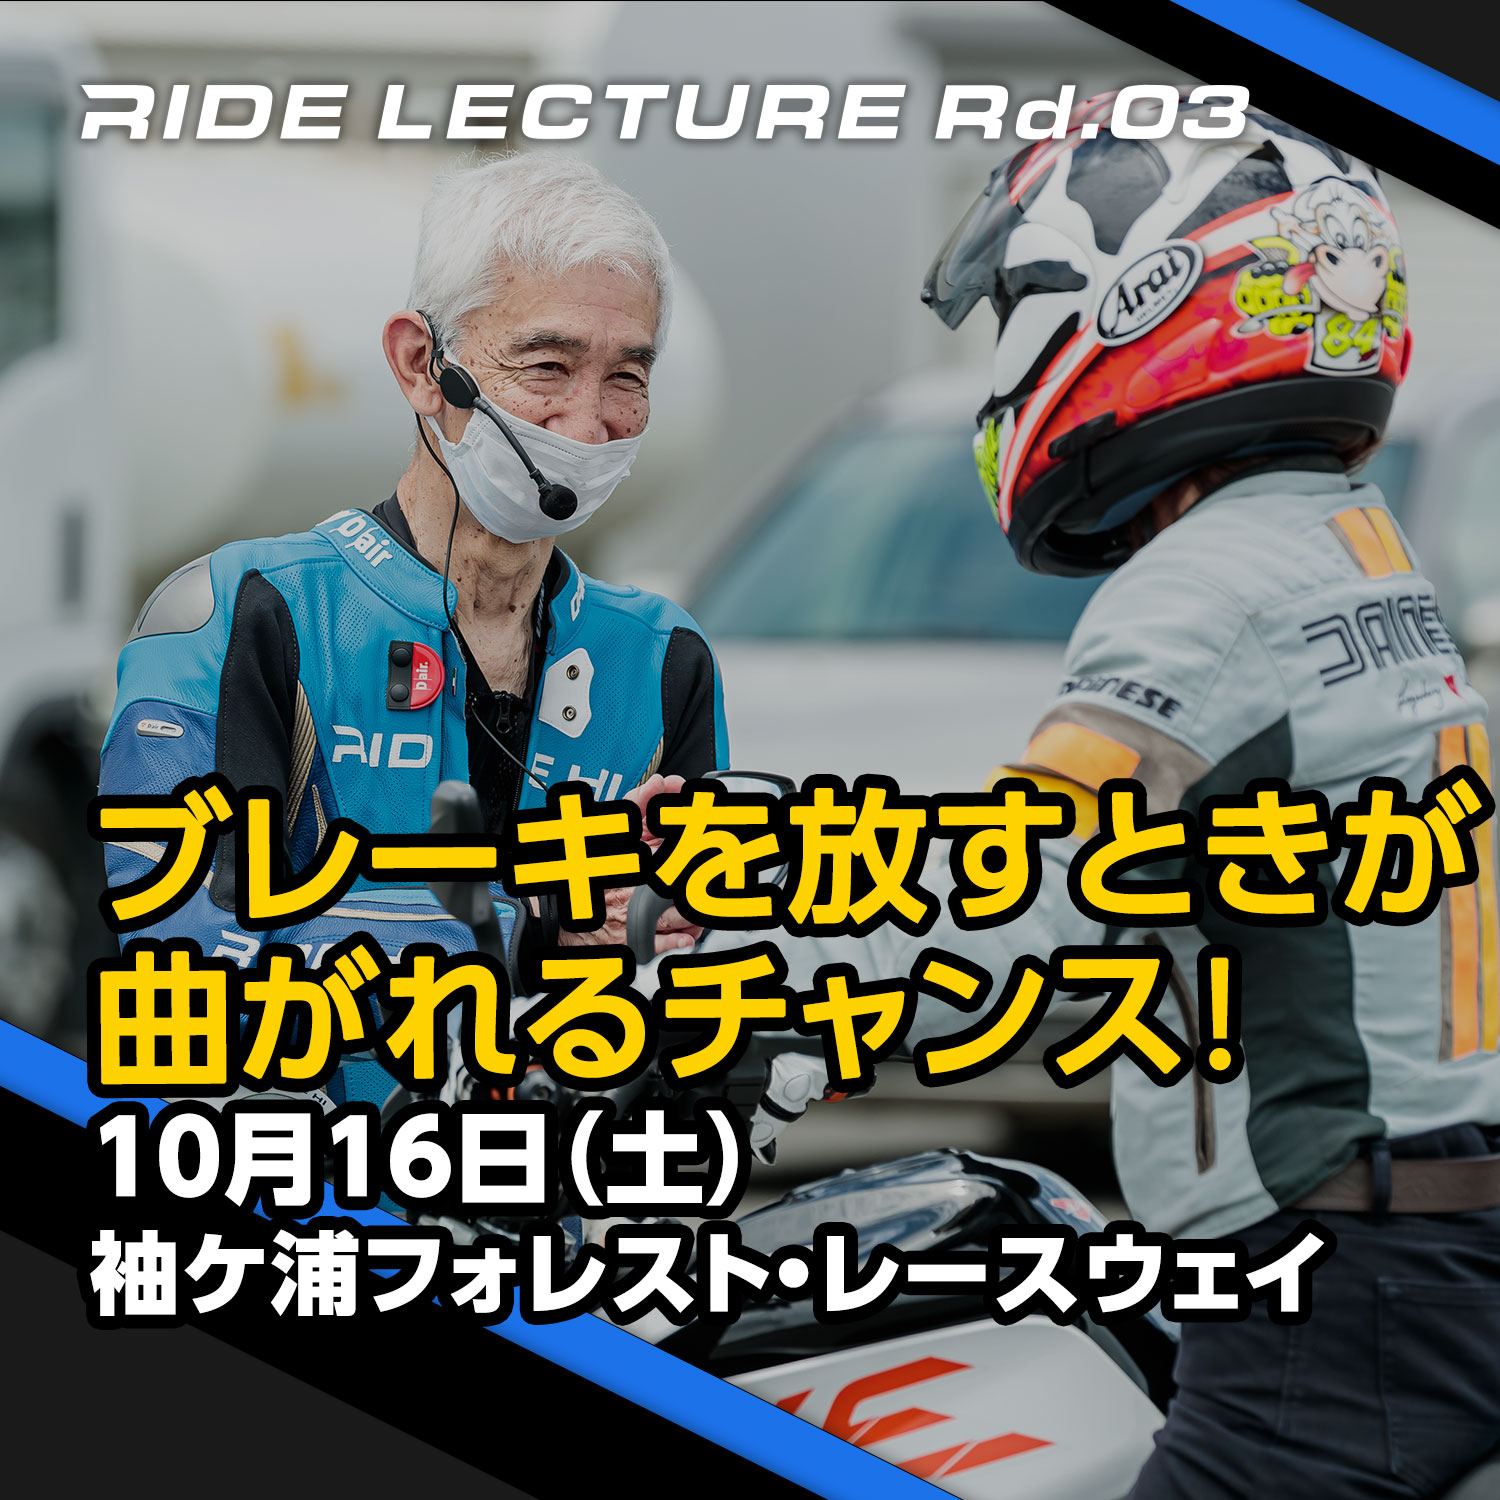 ride-lecture_round003_main.jpg